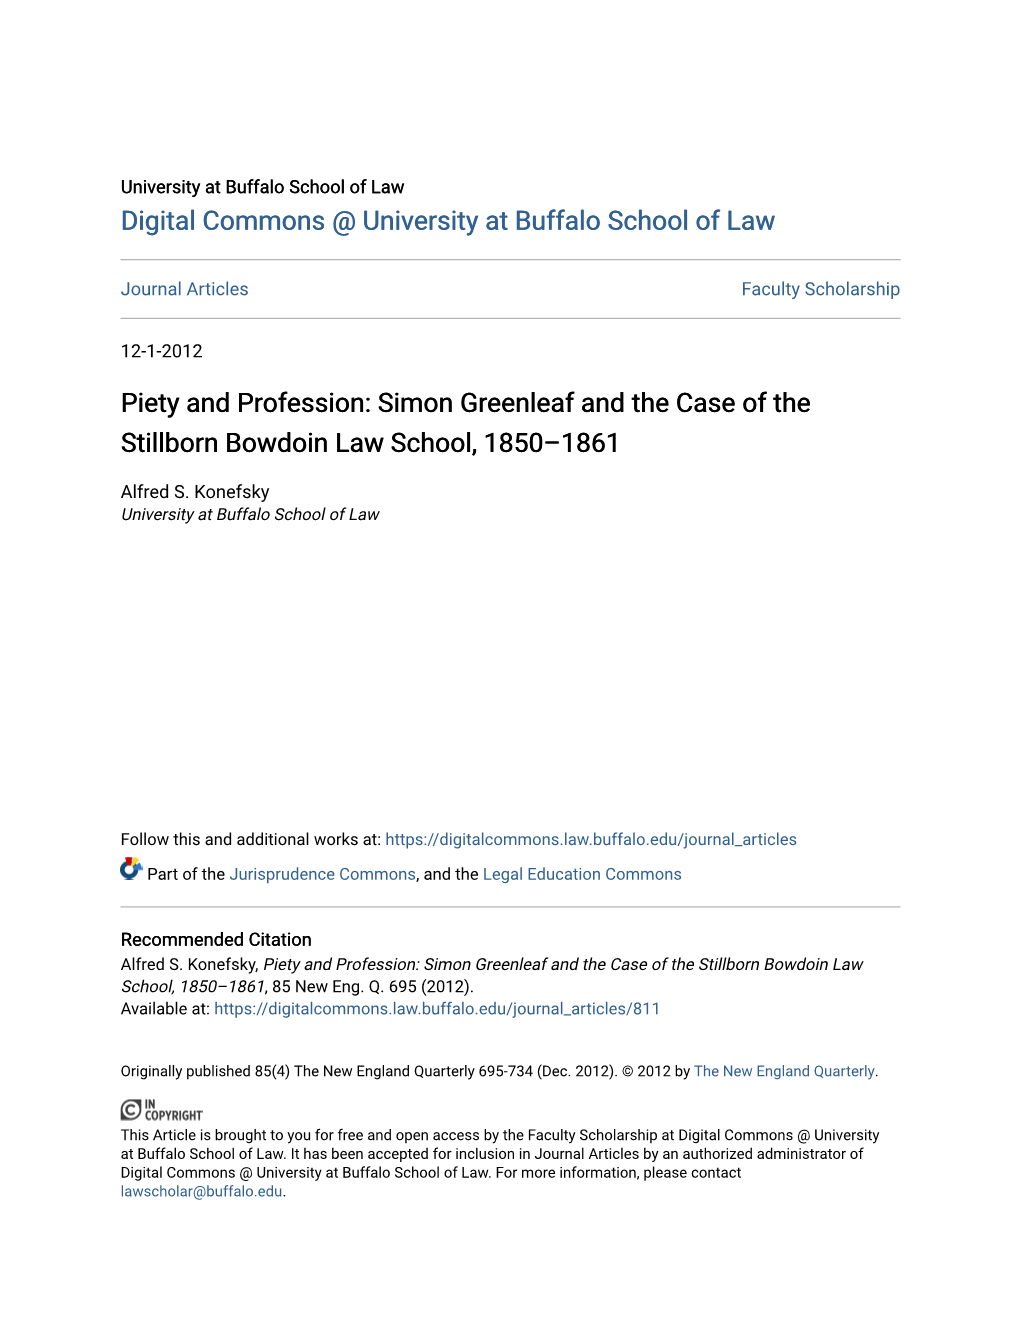 Simon Greenleaf and the Case of the Stillborn Bowdoin Law School, 1850–1861